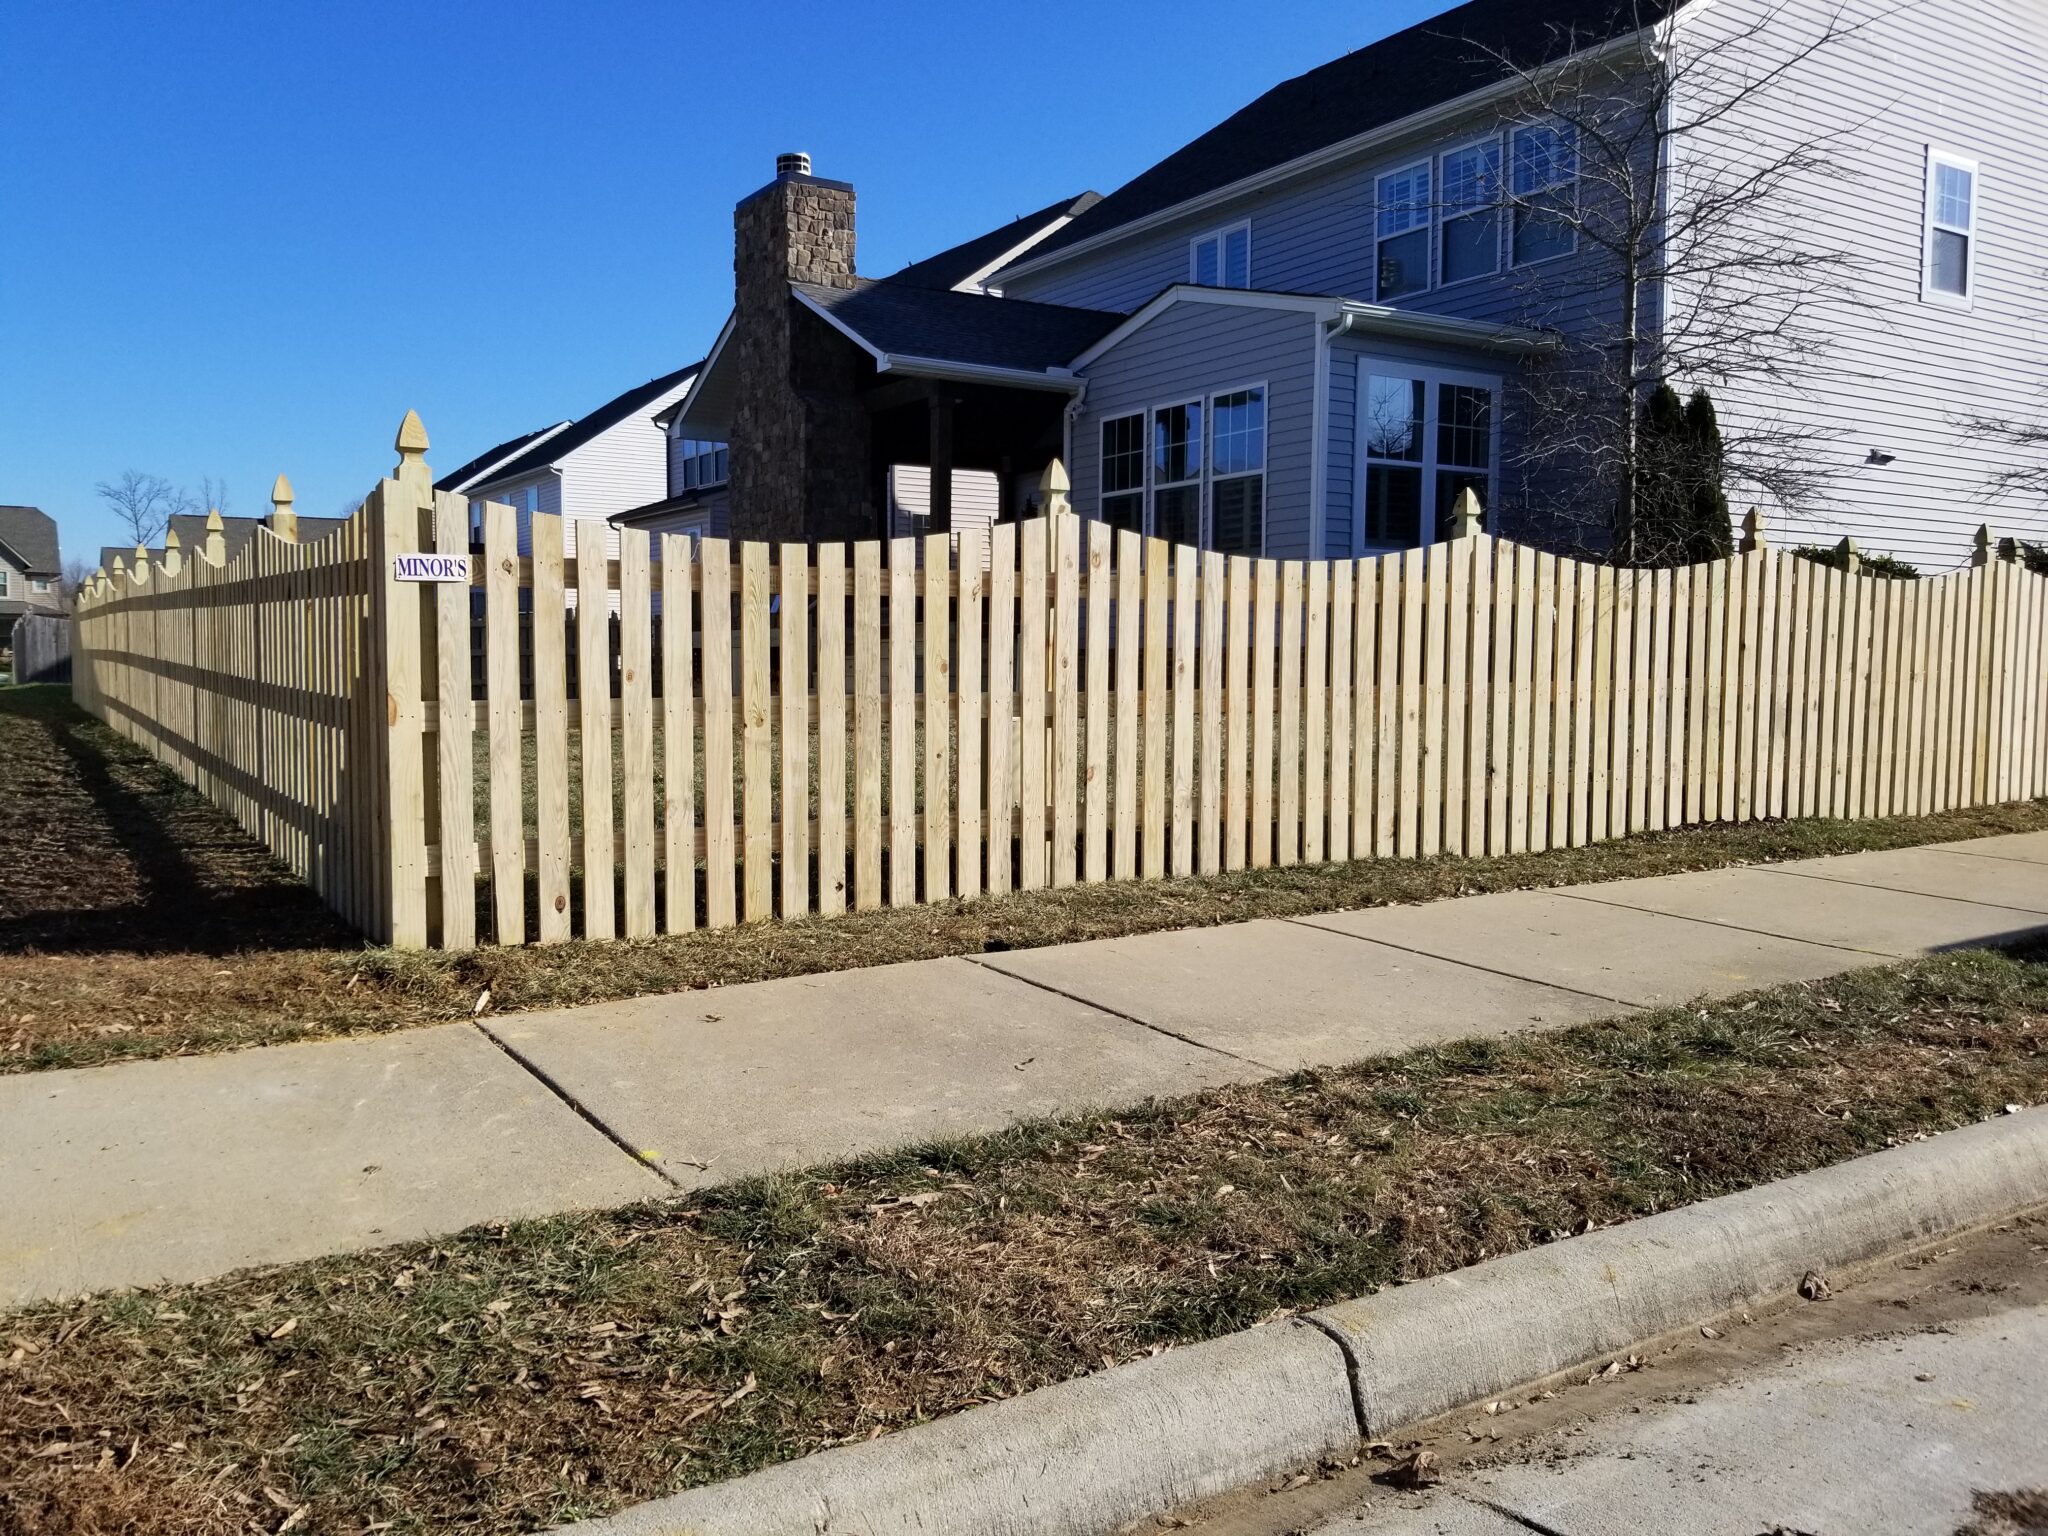 54" wood picket fence